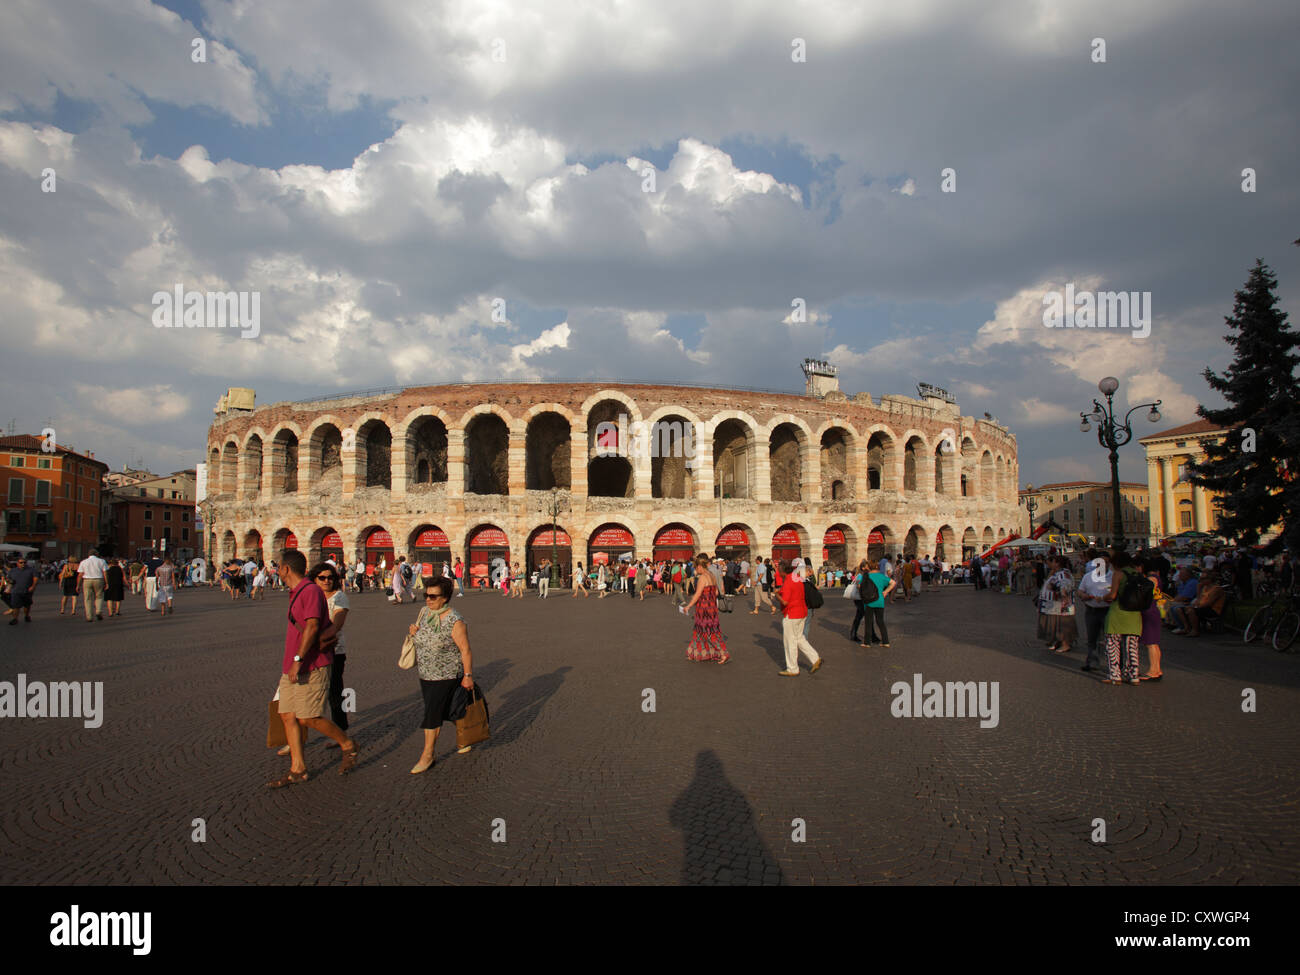 The Roman Arena in Piazza Bra, Verona, Italy Stock Photo